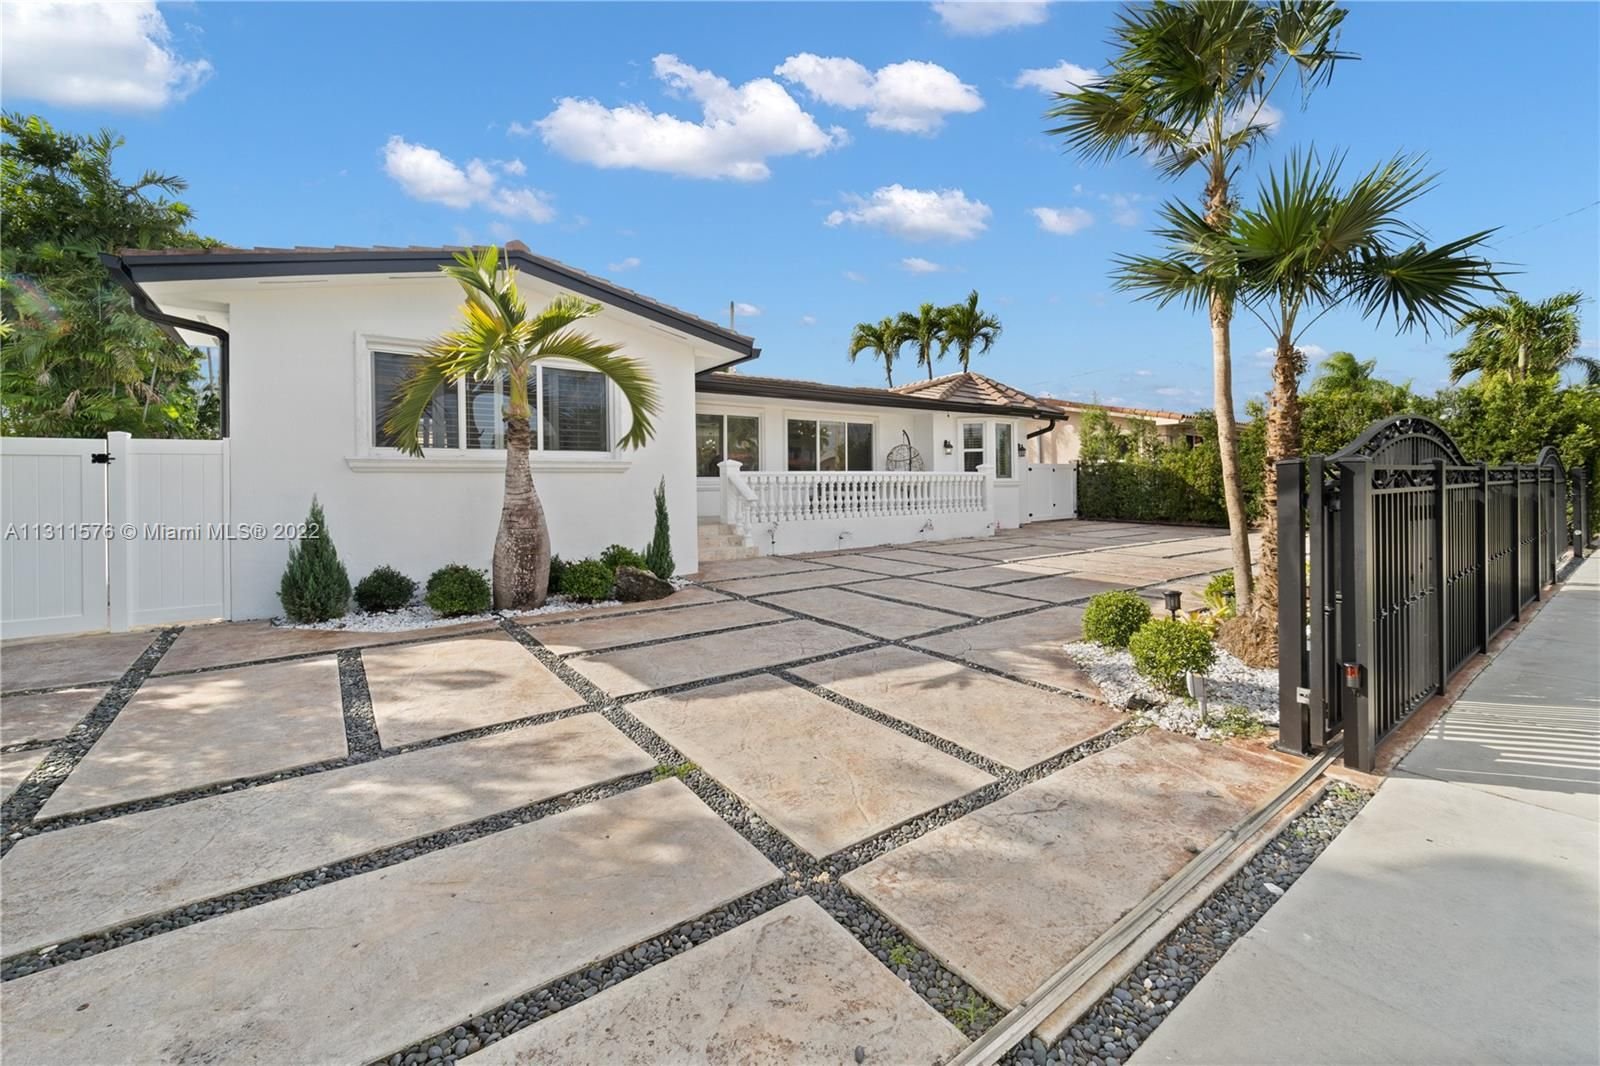 Real estate property located at 5040 90th Ct, Miami-Dade County, Miami, FL